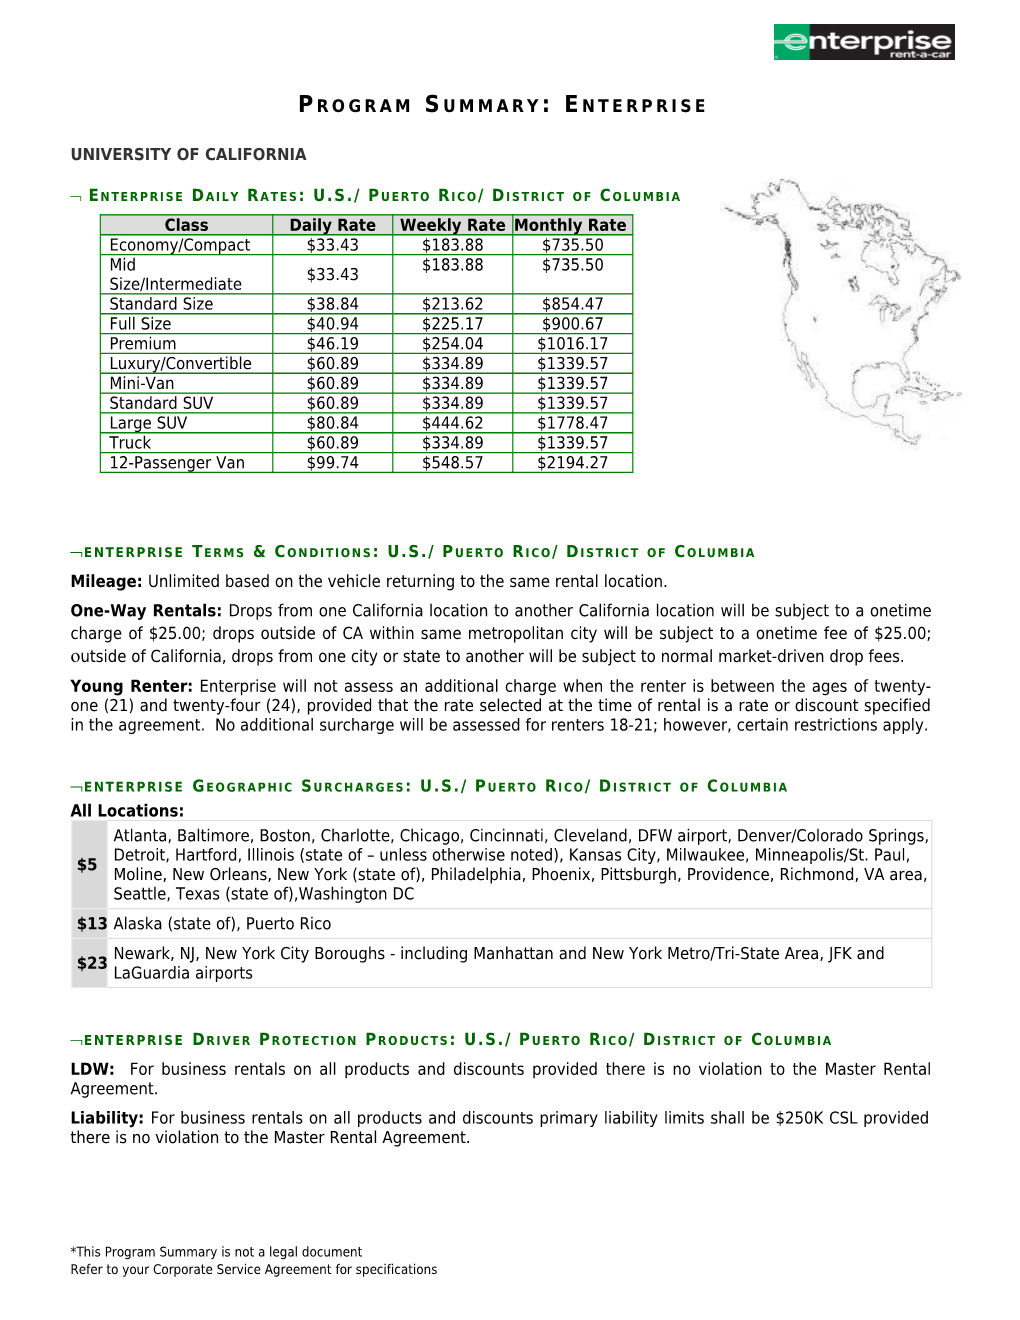 Ø Enterprise Daily Rates: U.S./ Puerto Rico/ District of Columbia